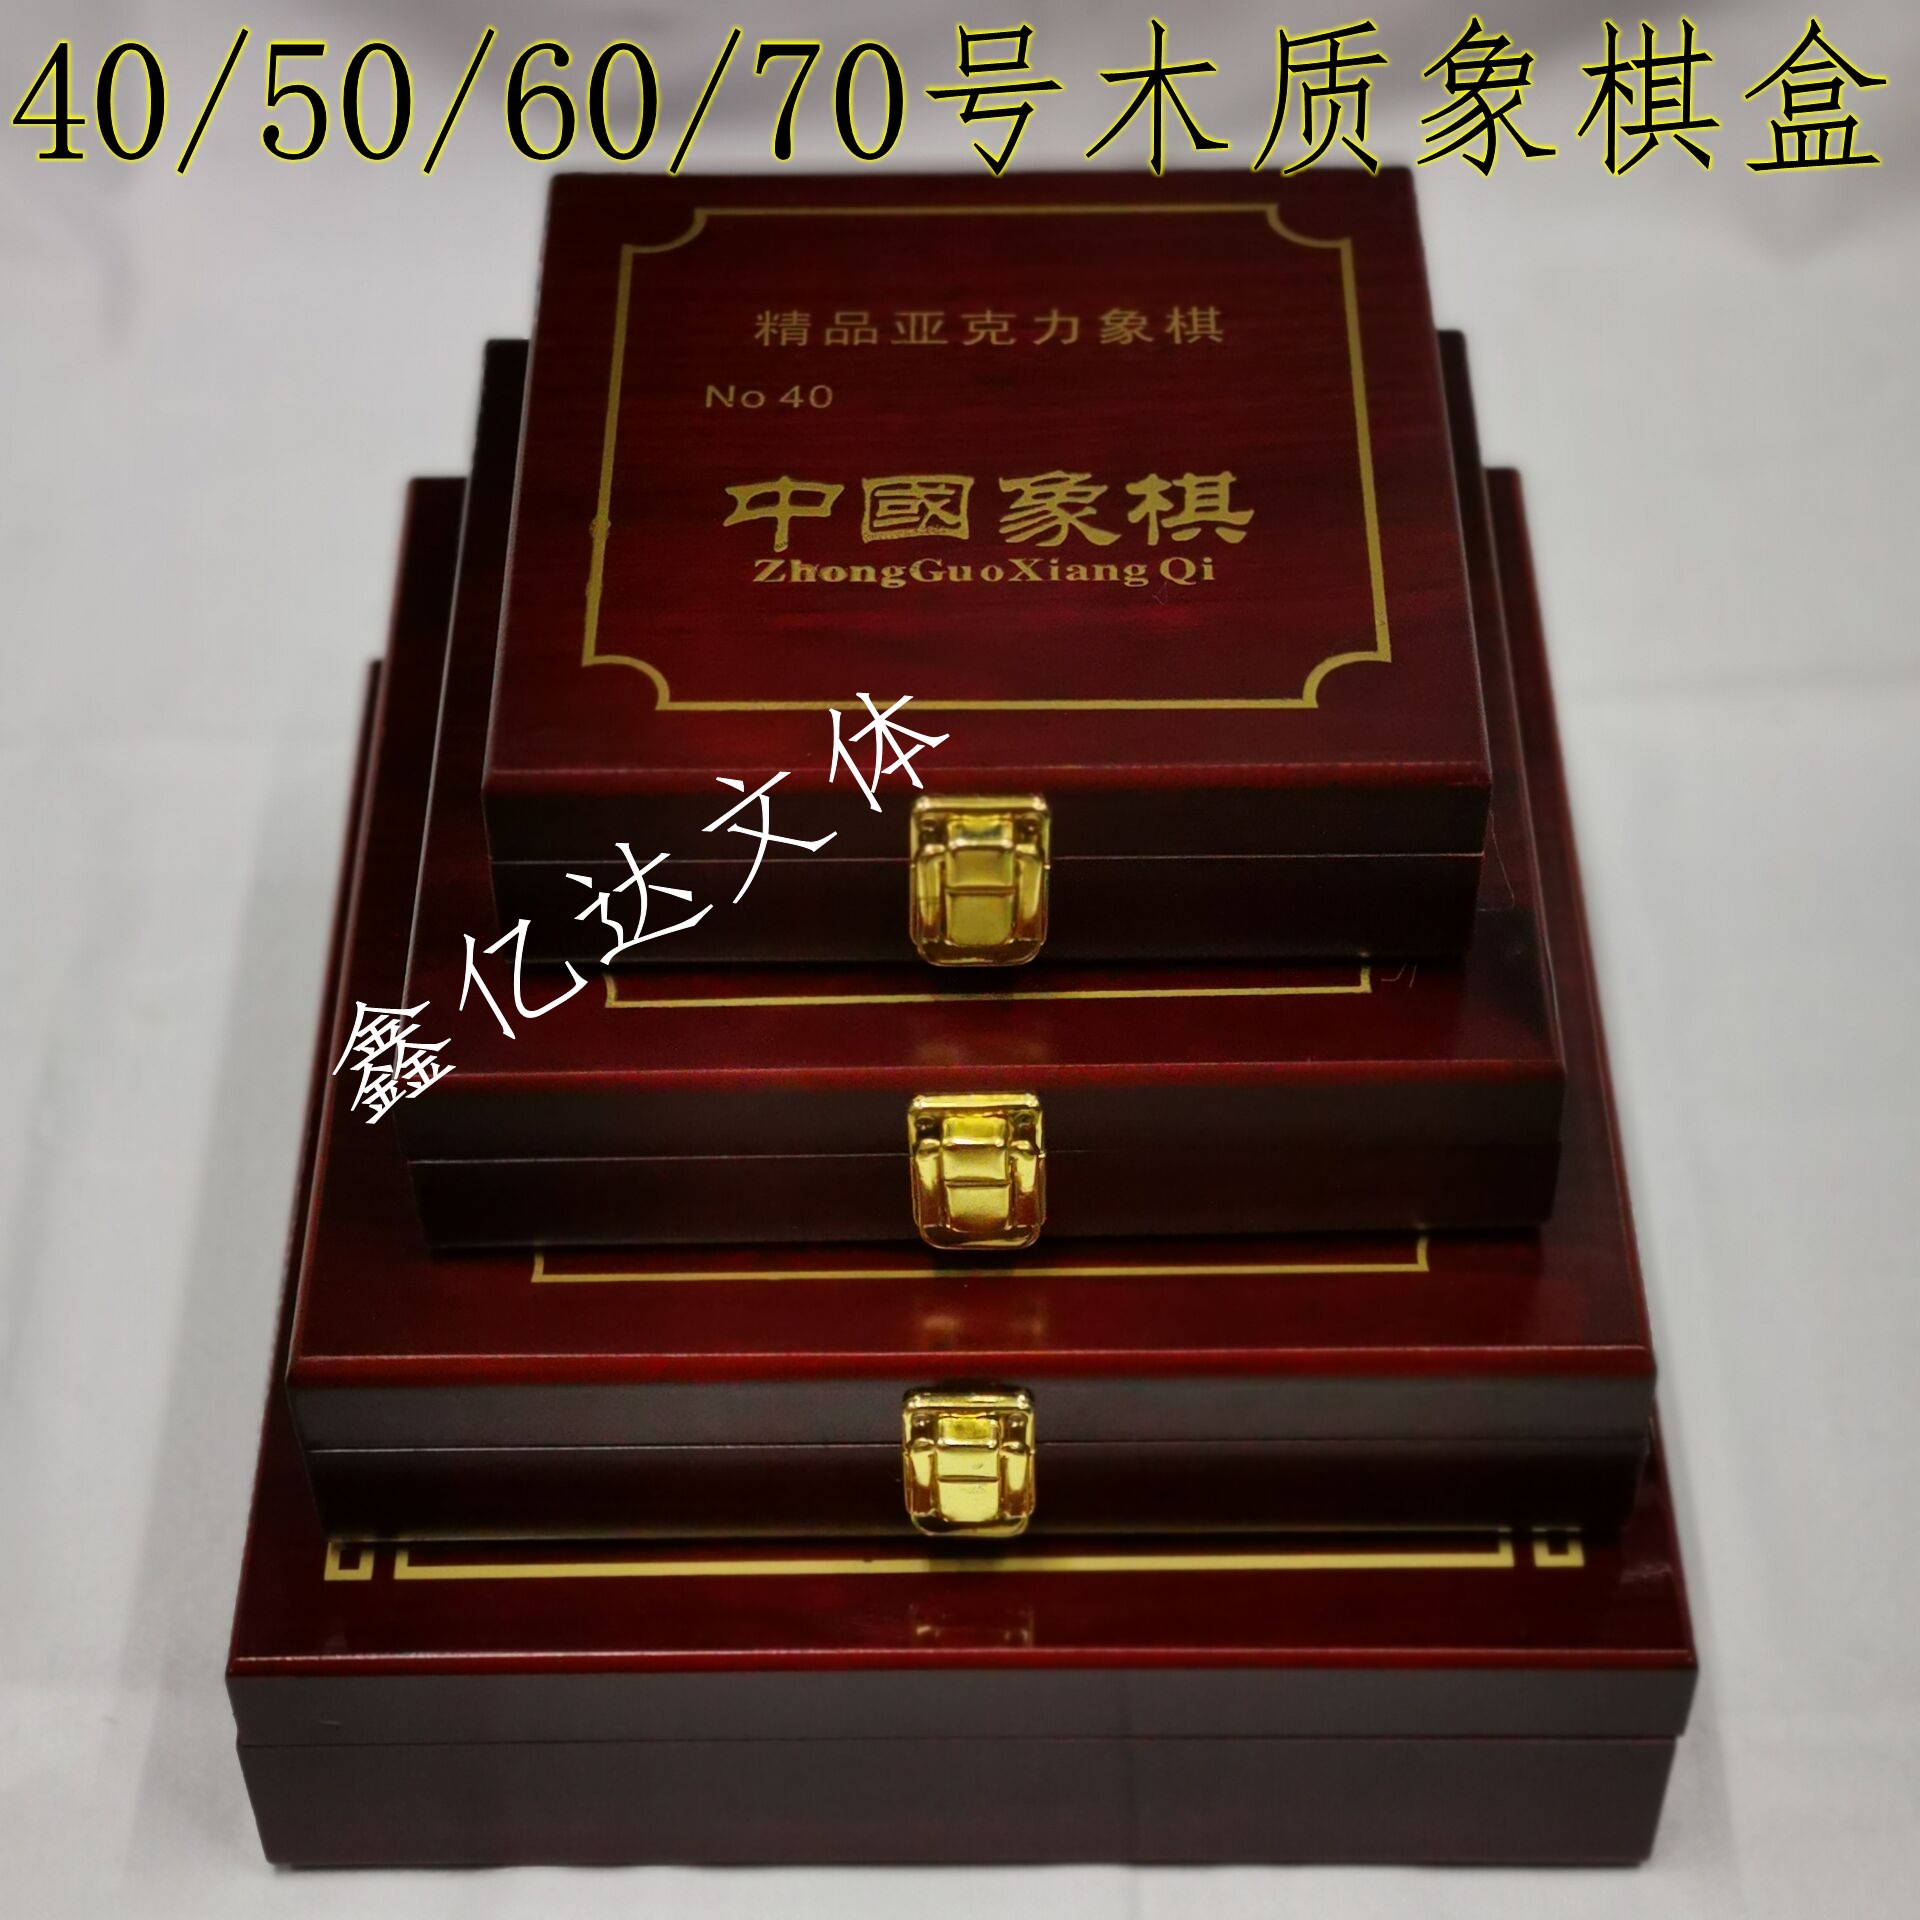 Wooden chess box empty box China chess box chess storage box 40 50 60 70 chess box